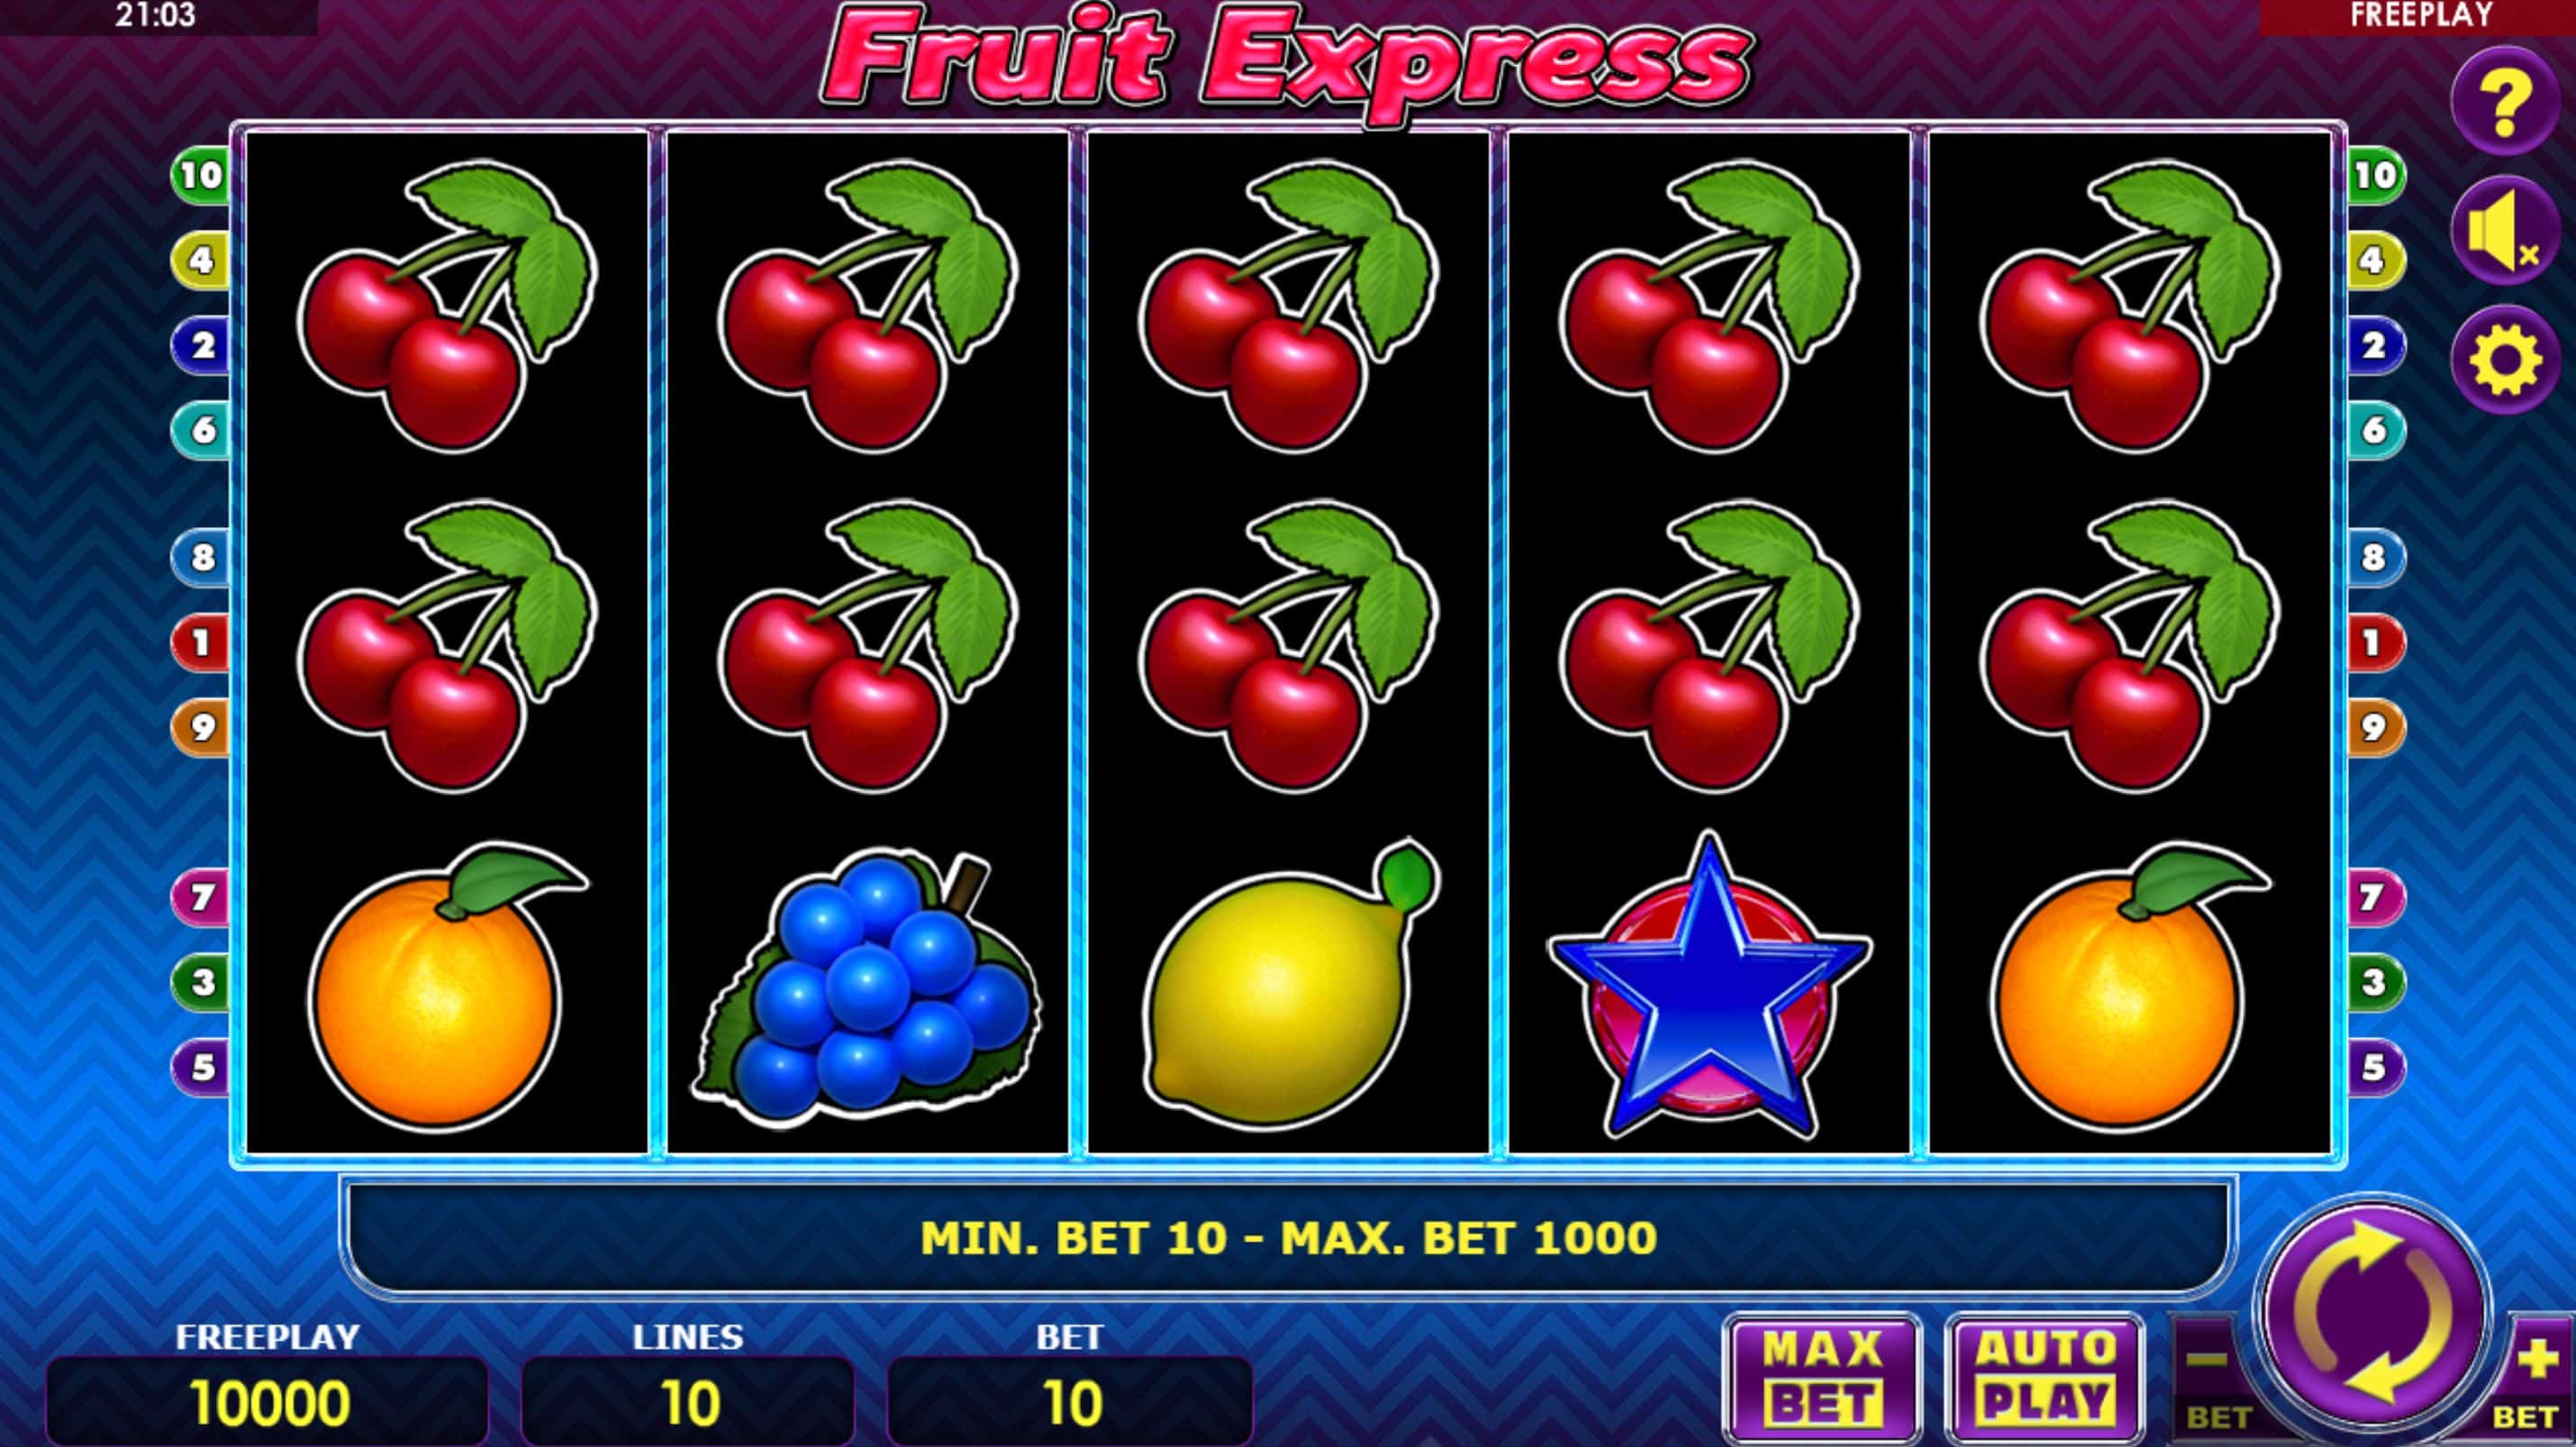 Fruit Express Slot Game Free Play at Casino Ireland 01